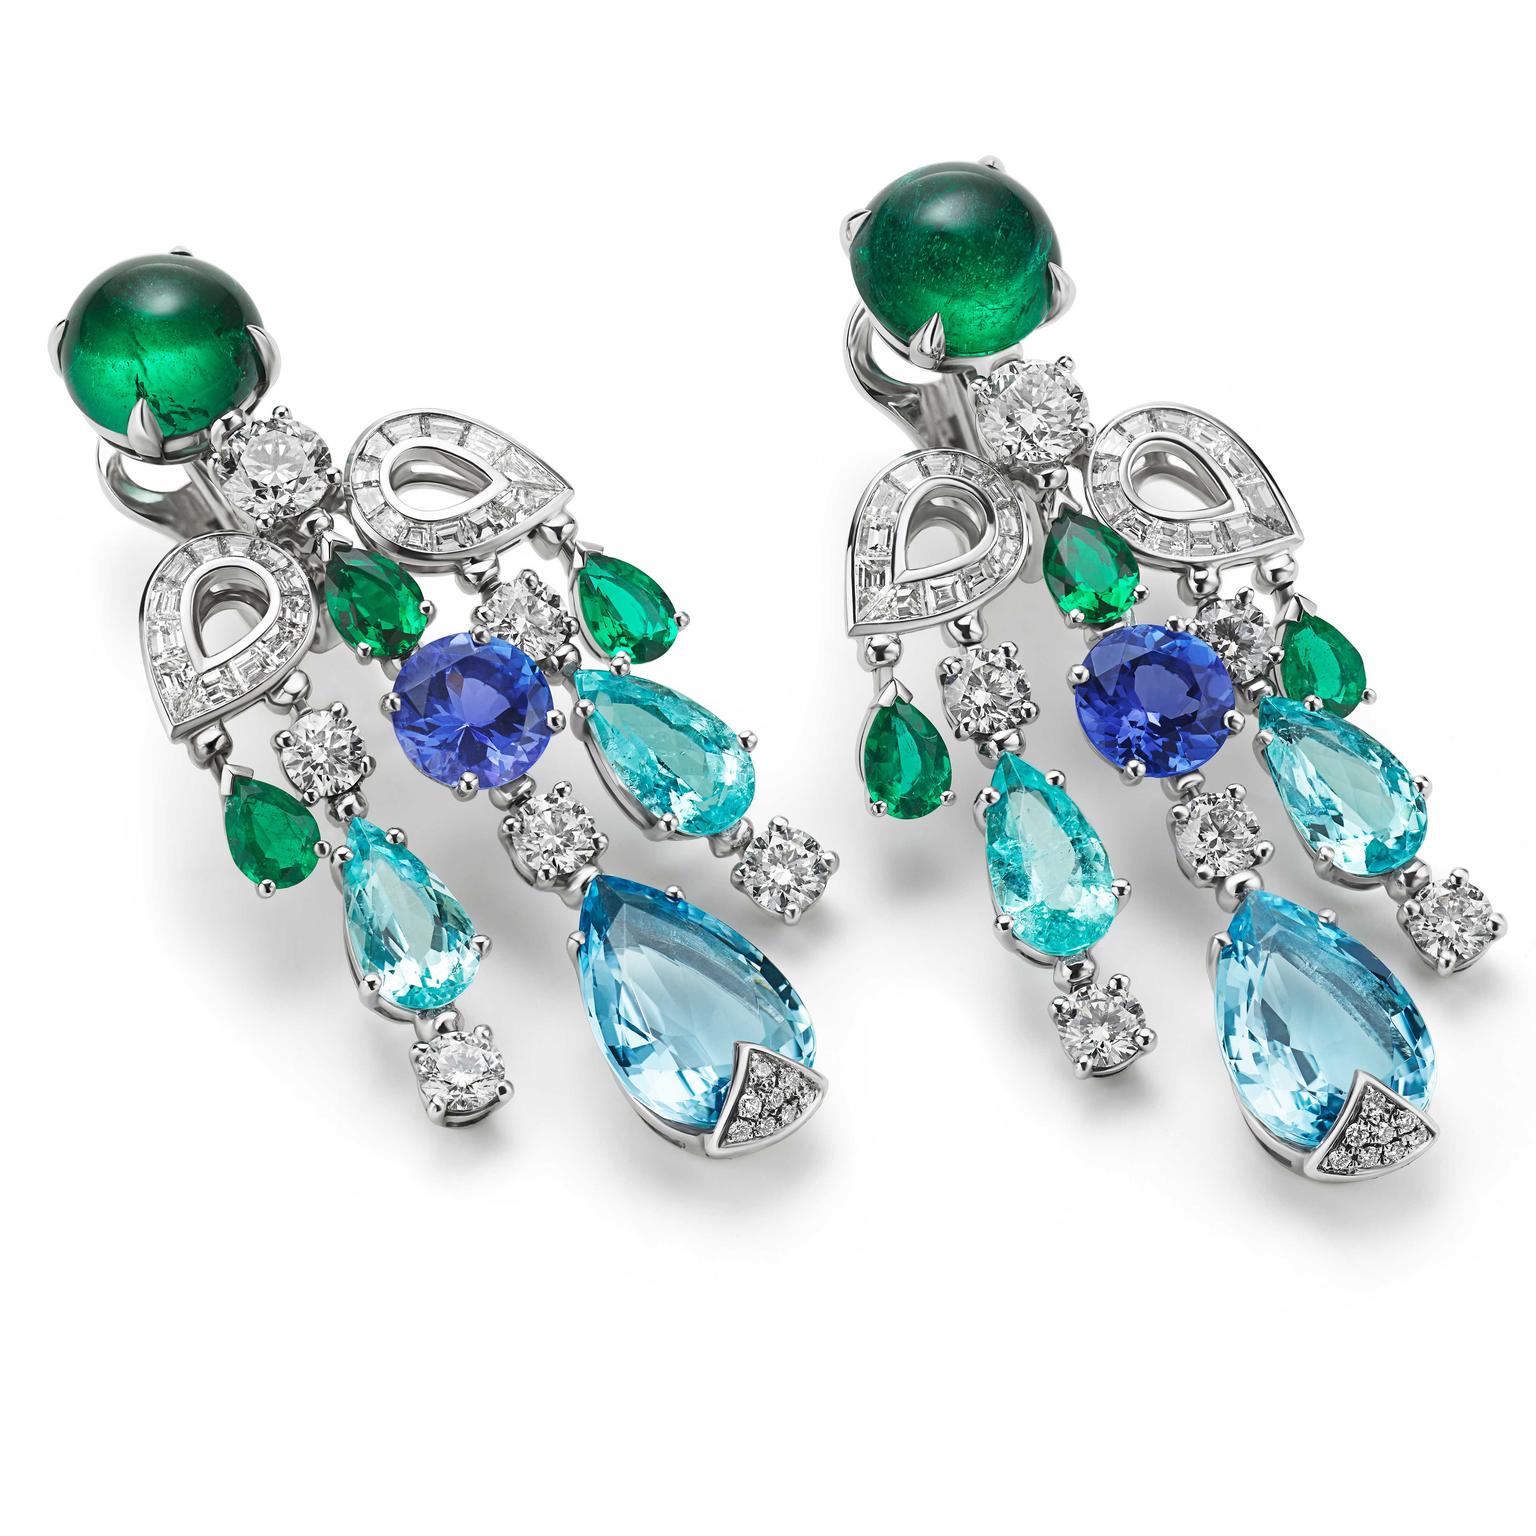 Paraiba tourmaline earrings by Bulgari